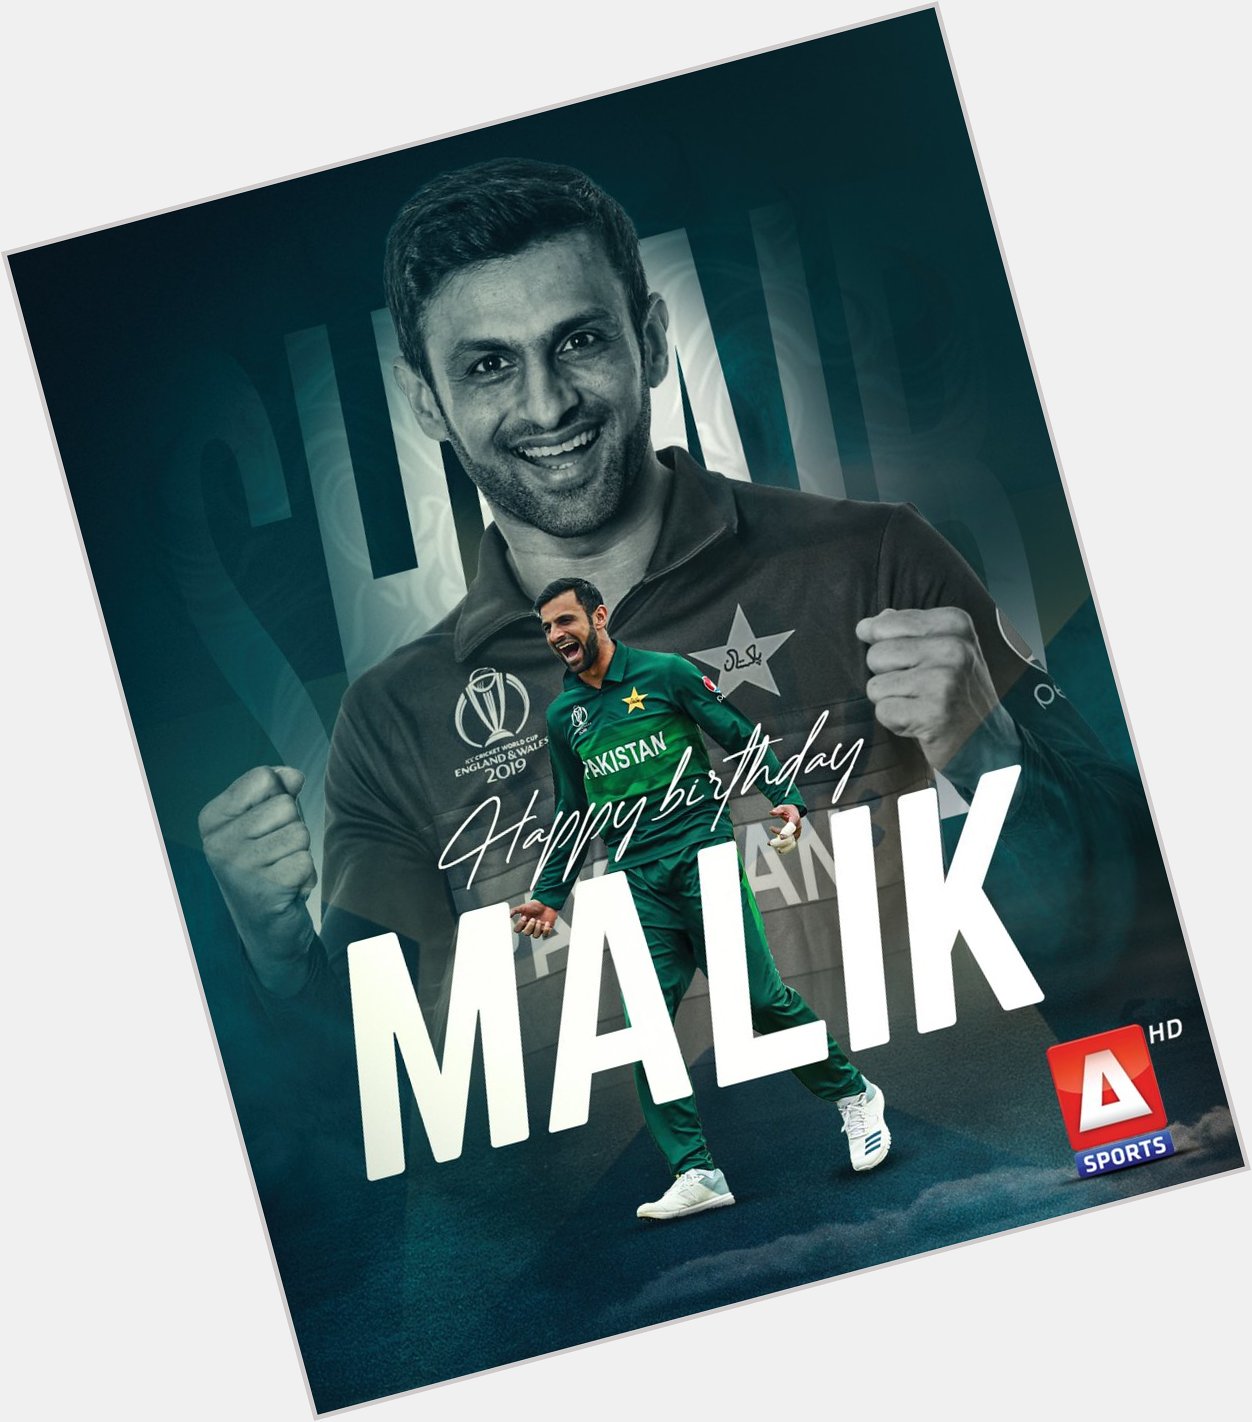 Wishing a very special happy birthday to Shoaib Malik!   